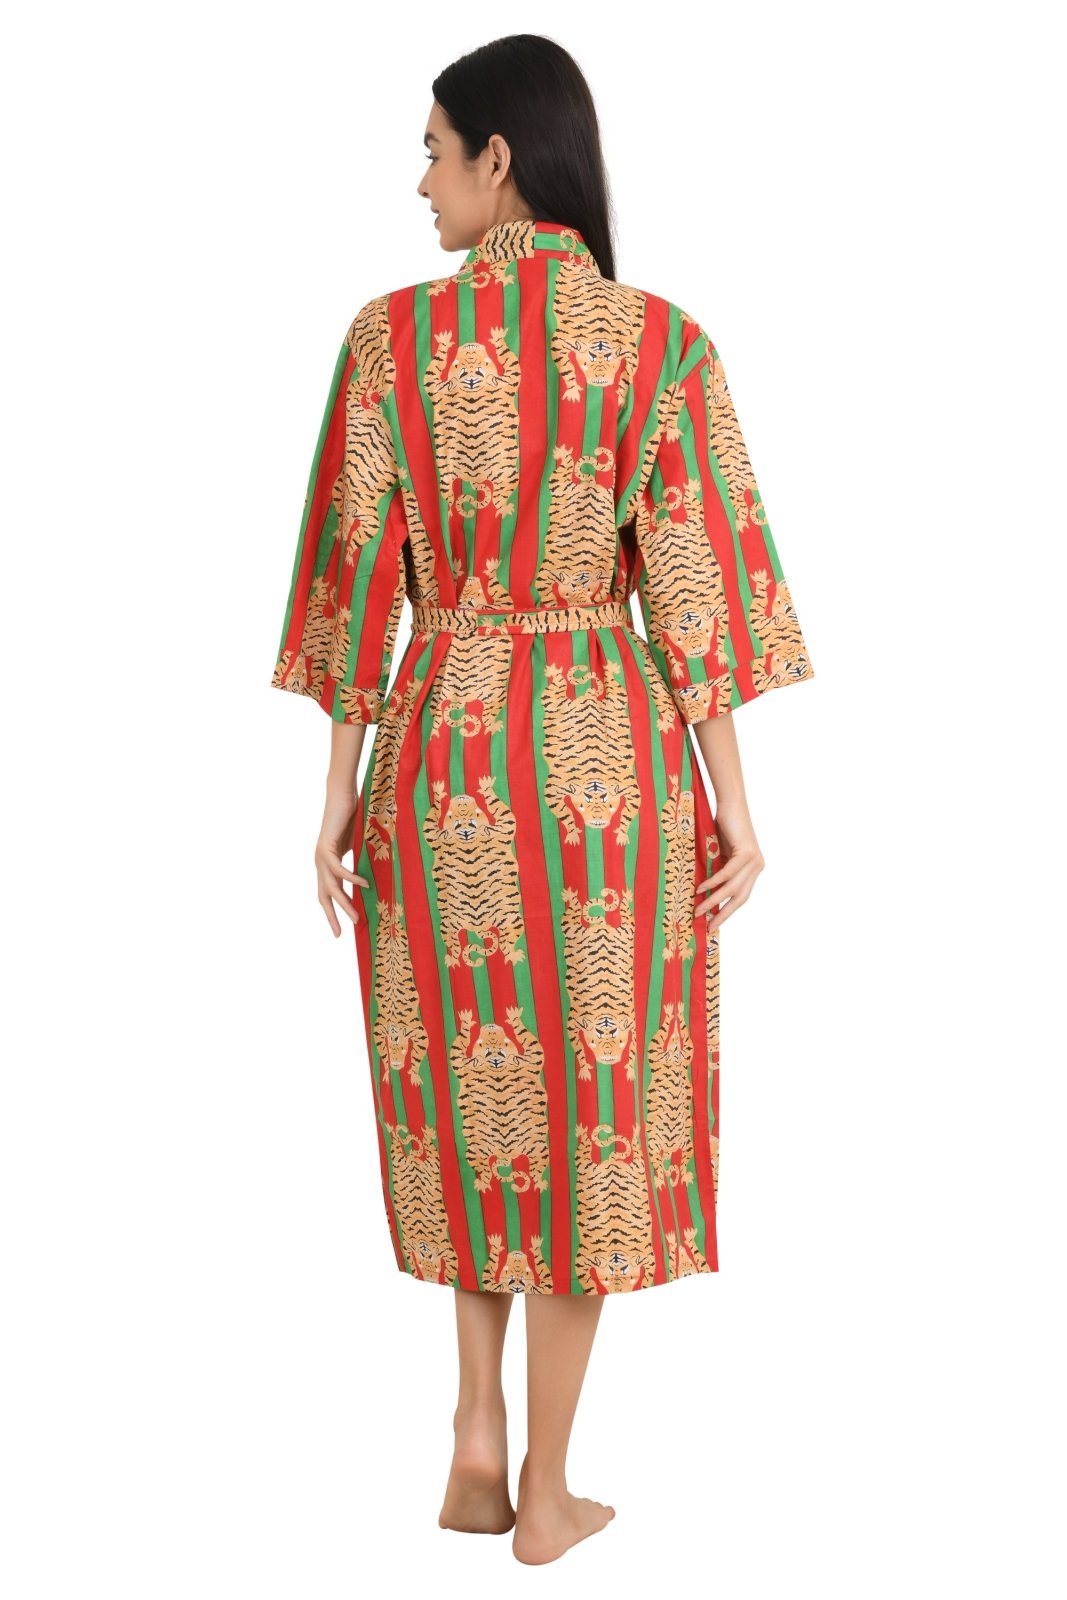 Kimono House Robe Indian Handprinted Strips Cheetah Print Pattern | Lightweight Summer Luxury Beach Holidays Yacht Cover Up Stunning Dress - The Eastern Loom